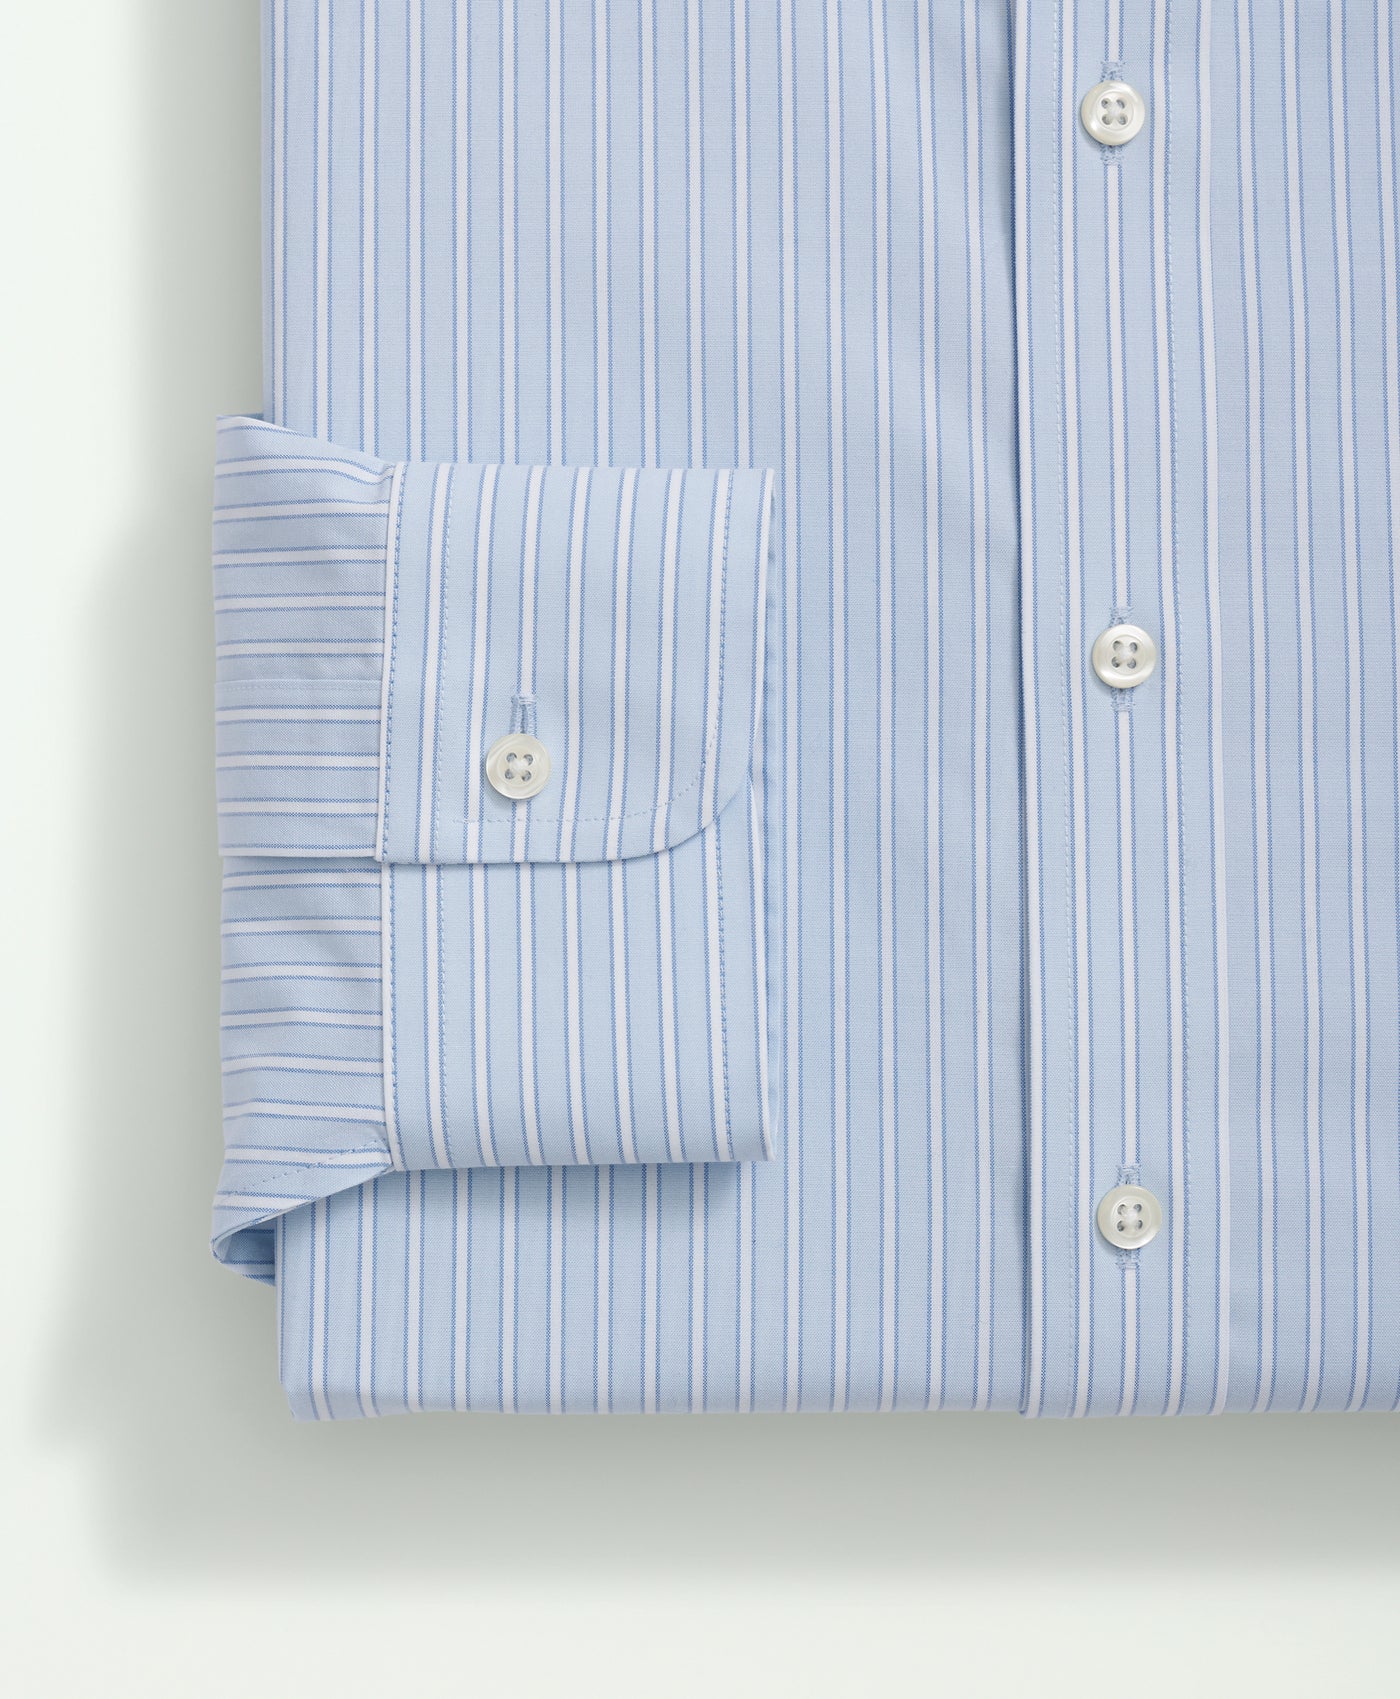 Stretch Slim-Fit Supima Cotton Non-Iron Poplin Button Down Collar, Stripe Dress Shirt - Brooks Brothers Canada